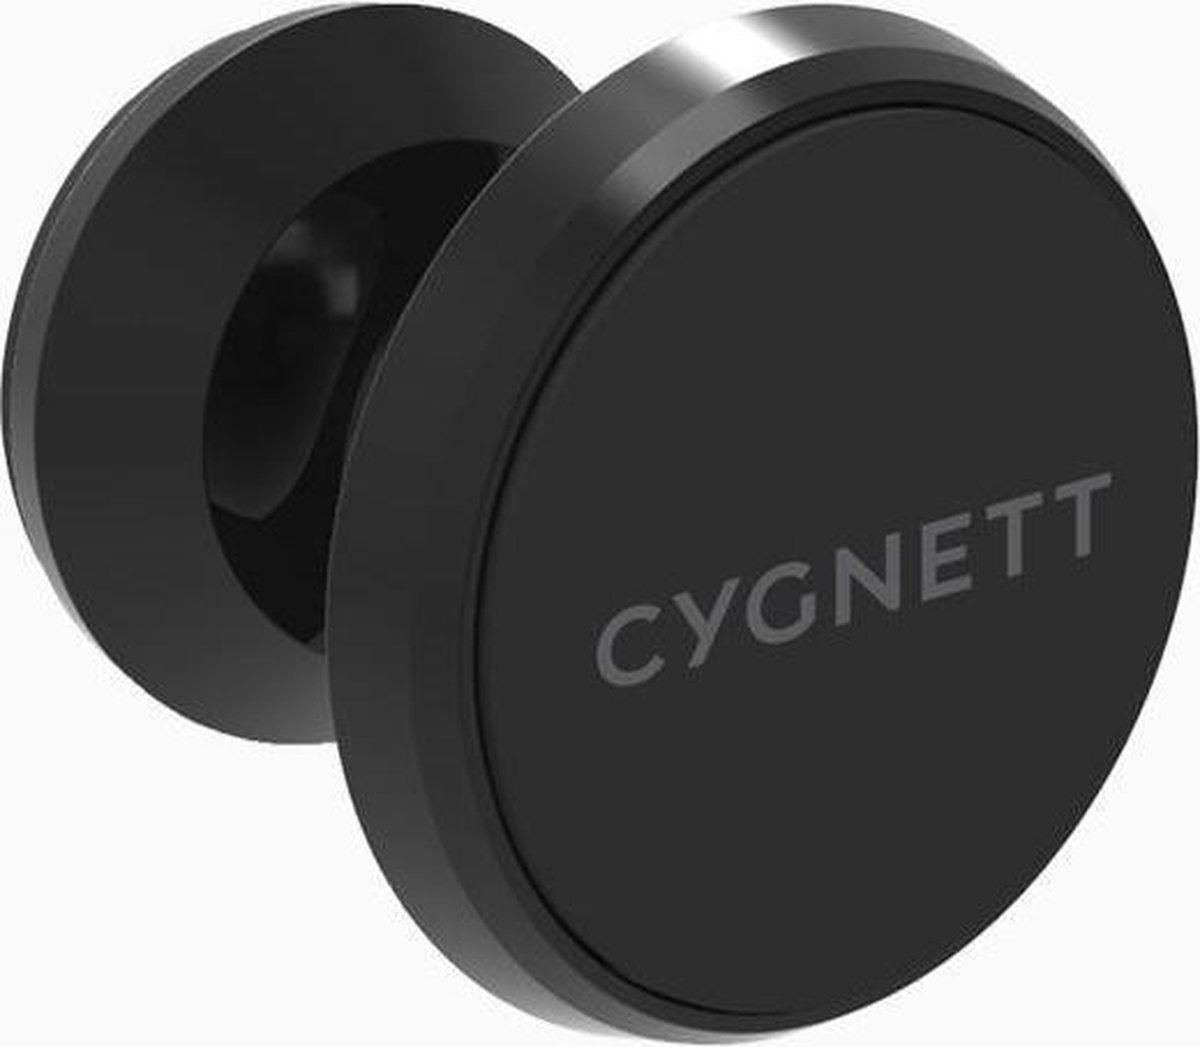 Cygnett CY2378ACDAS houder Mobiele telefoon/Smartphone Zwart